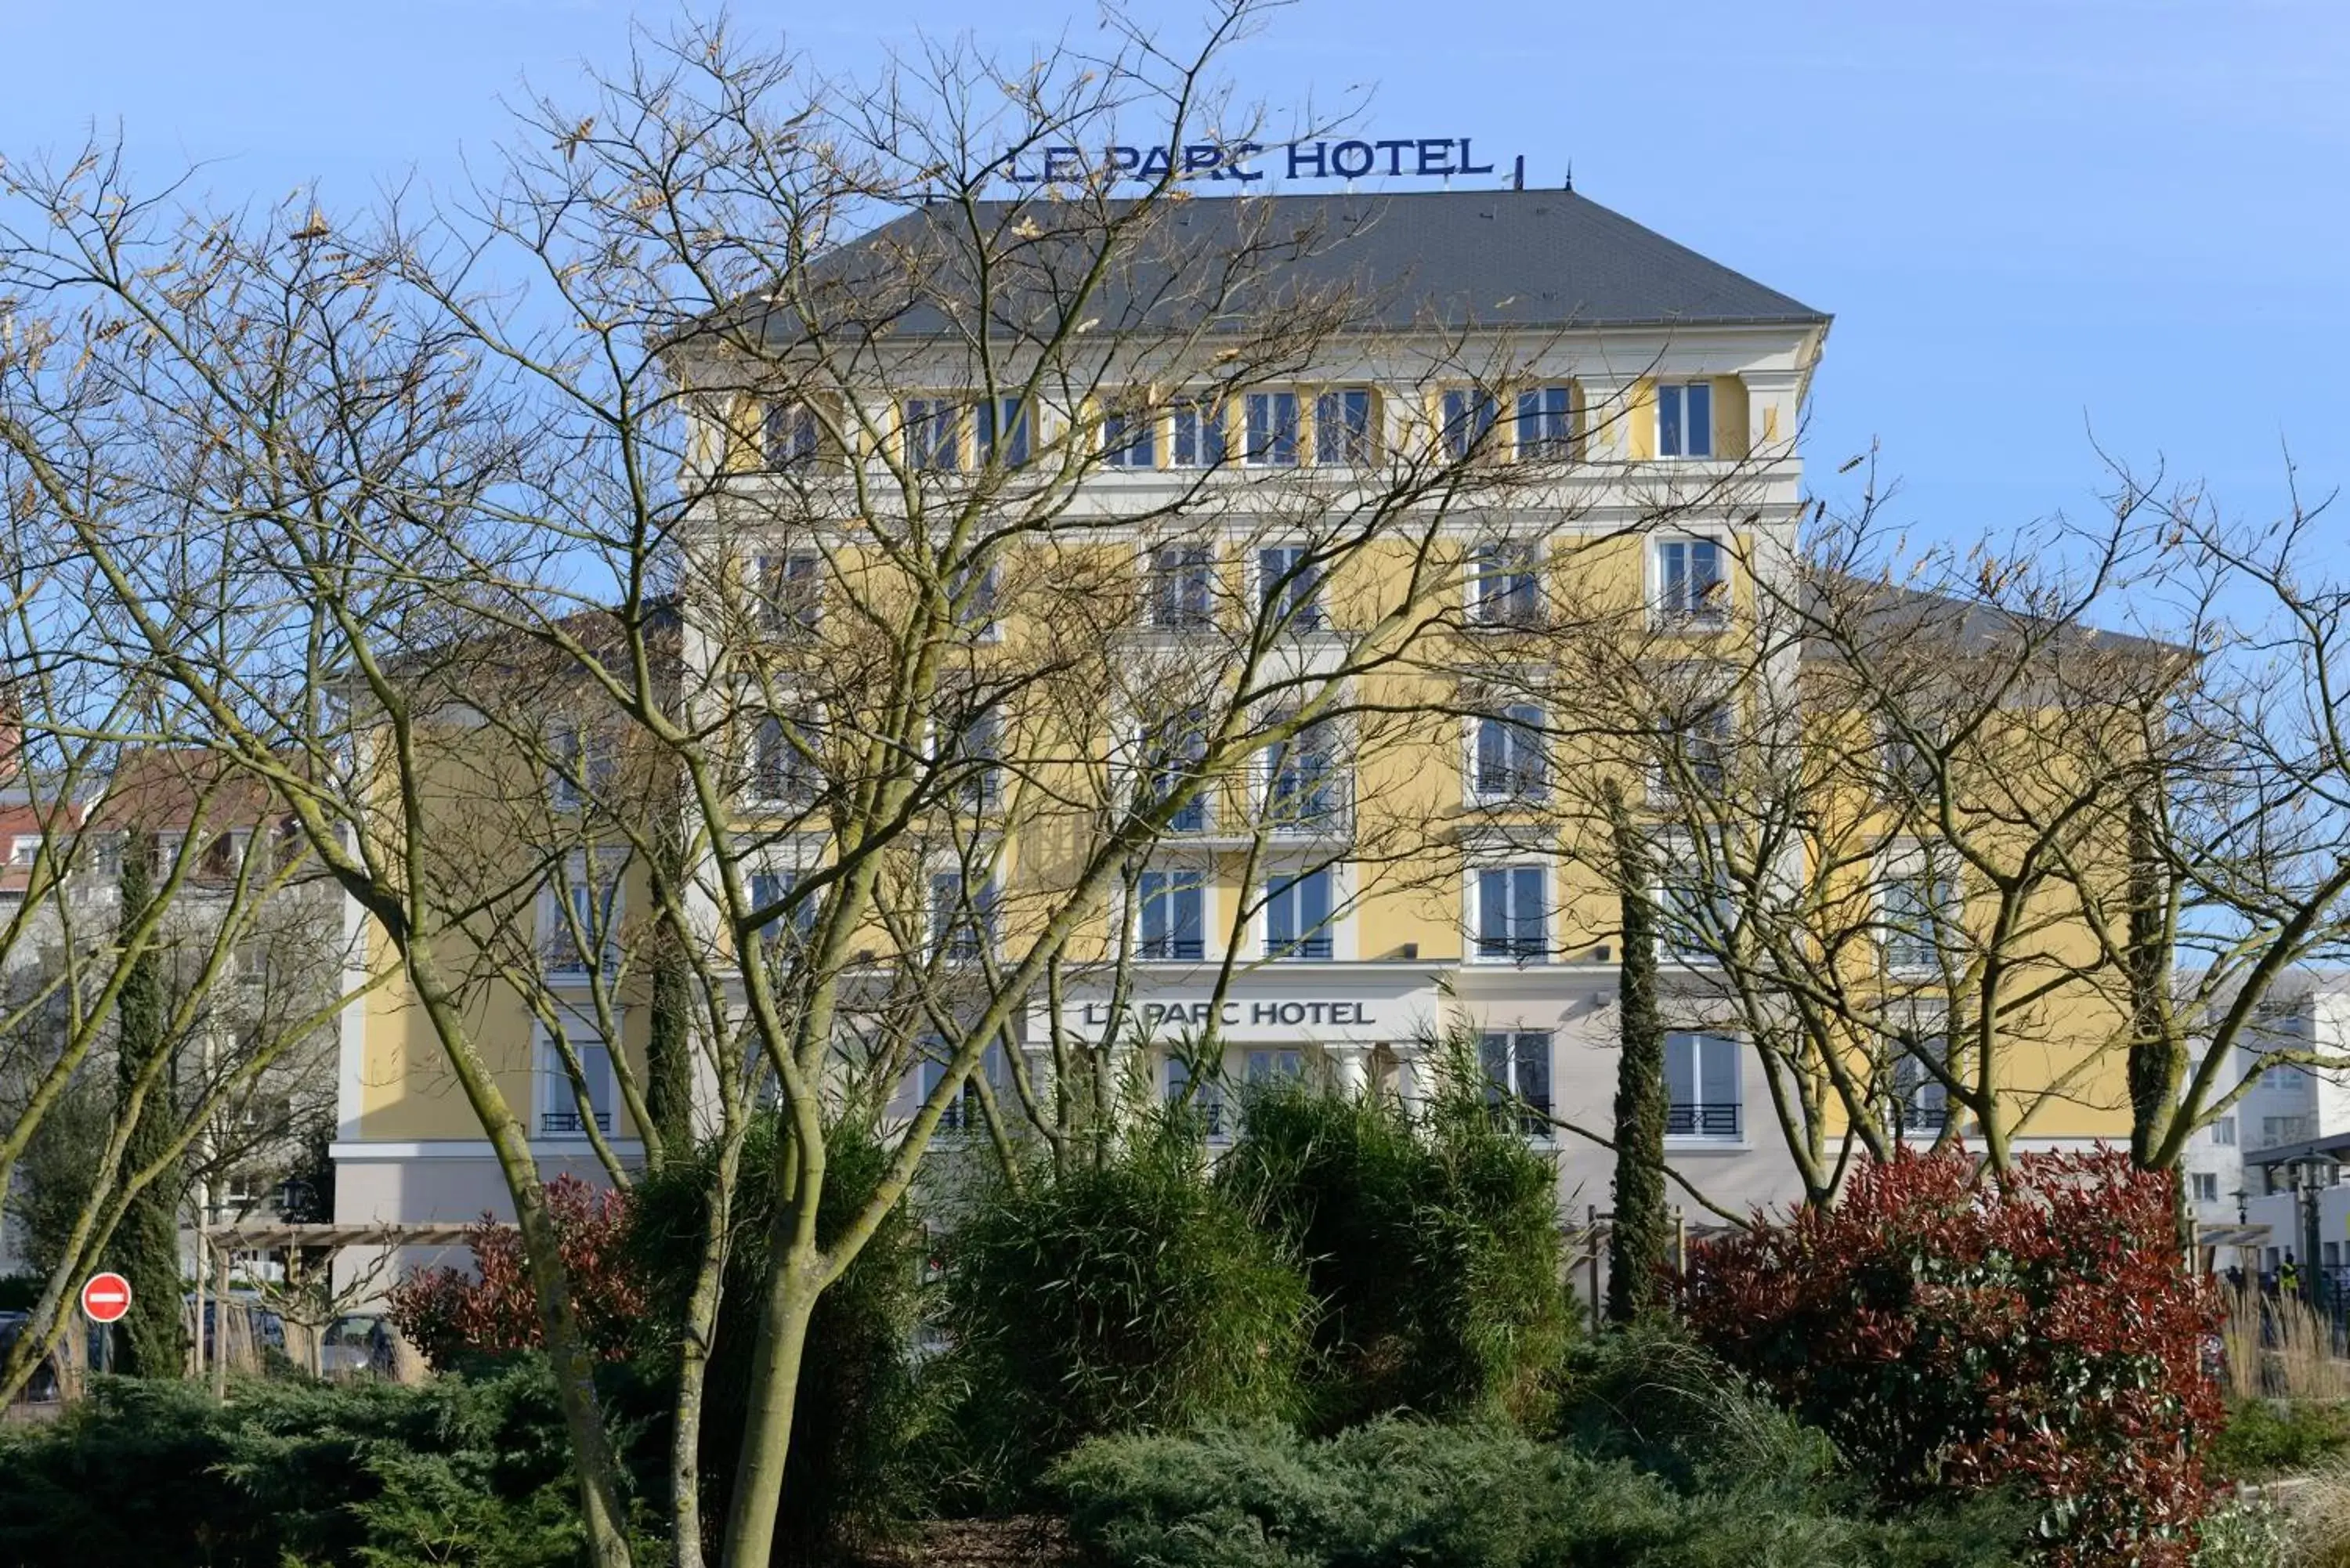 Property building in Plessis Parc Hôtel